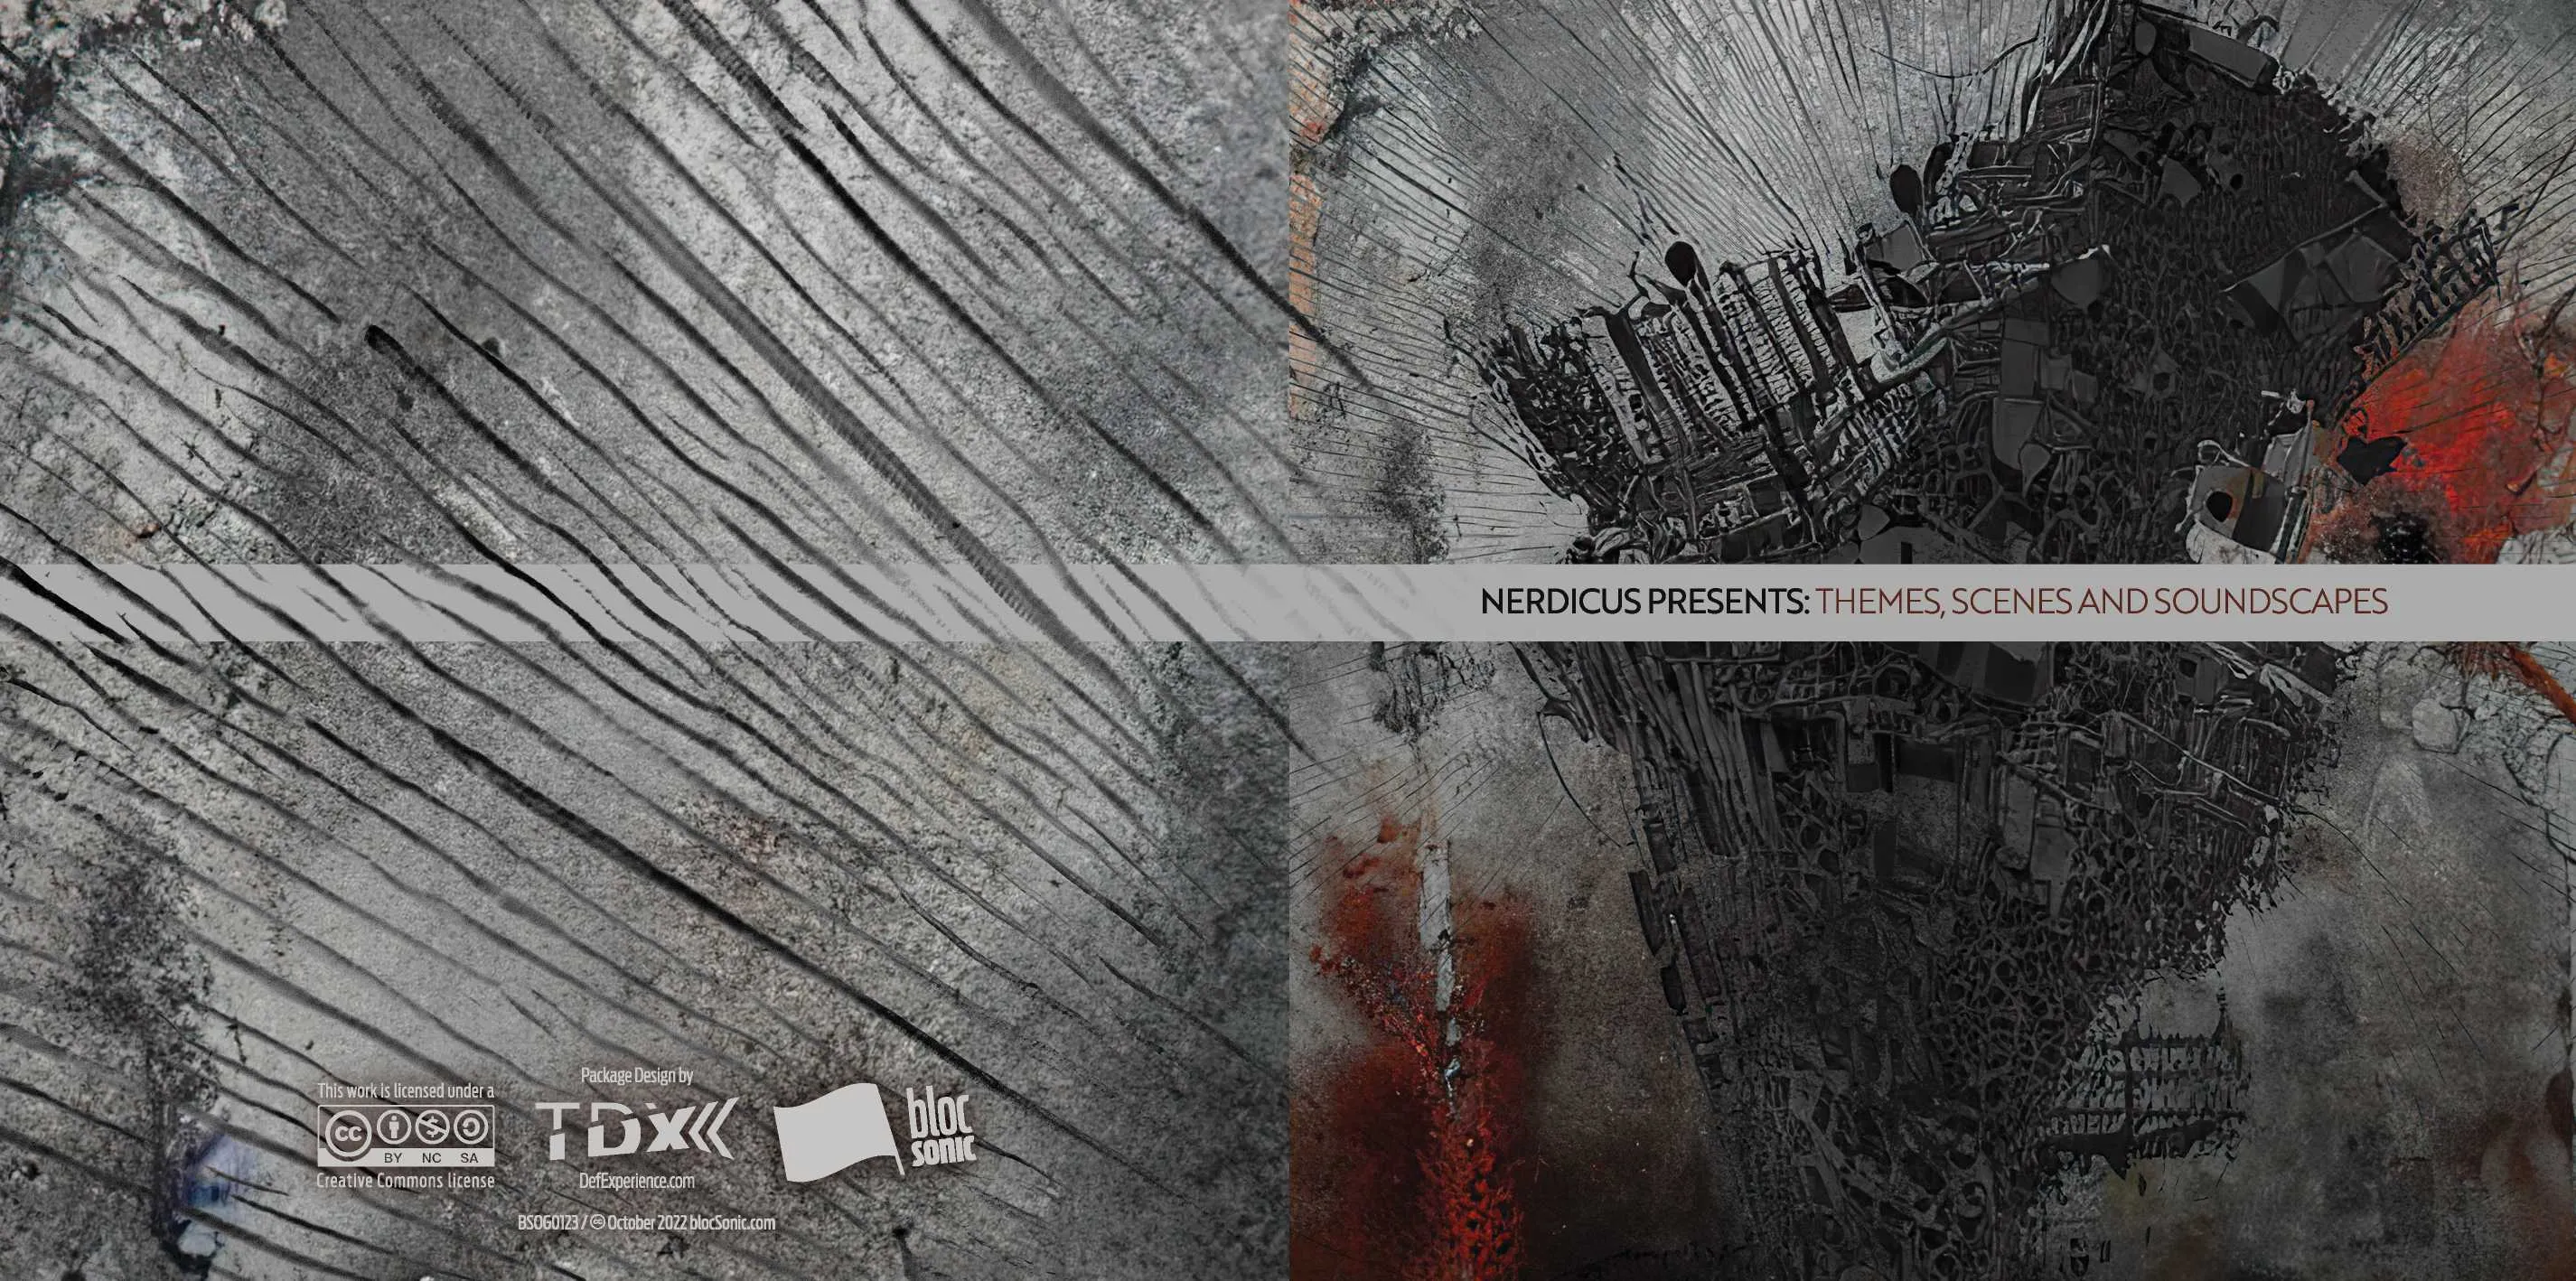 Album insert for “Nerdicus Presents: Themes, Scenes and Soundscapes” by Nerdicus